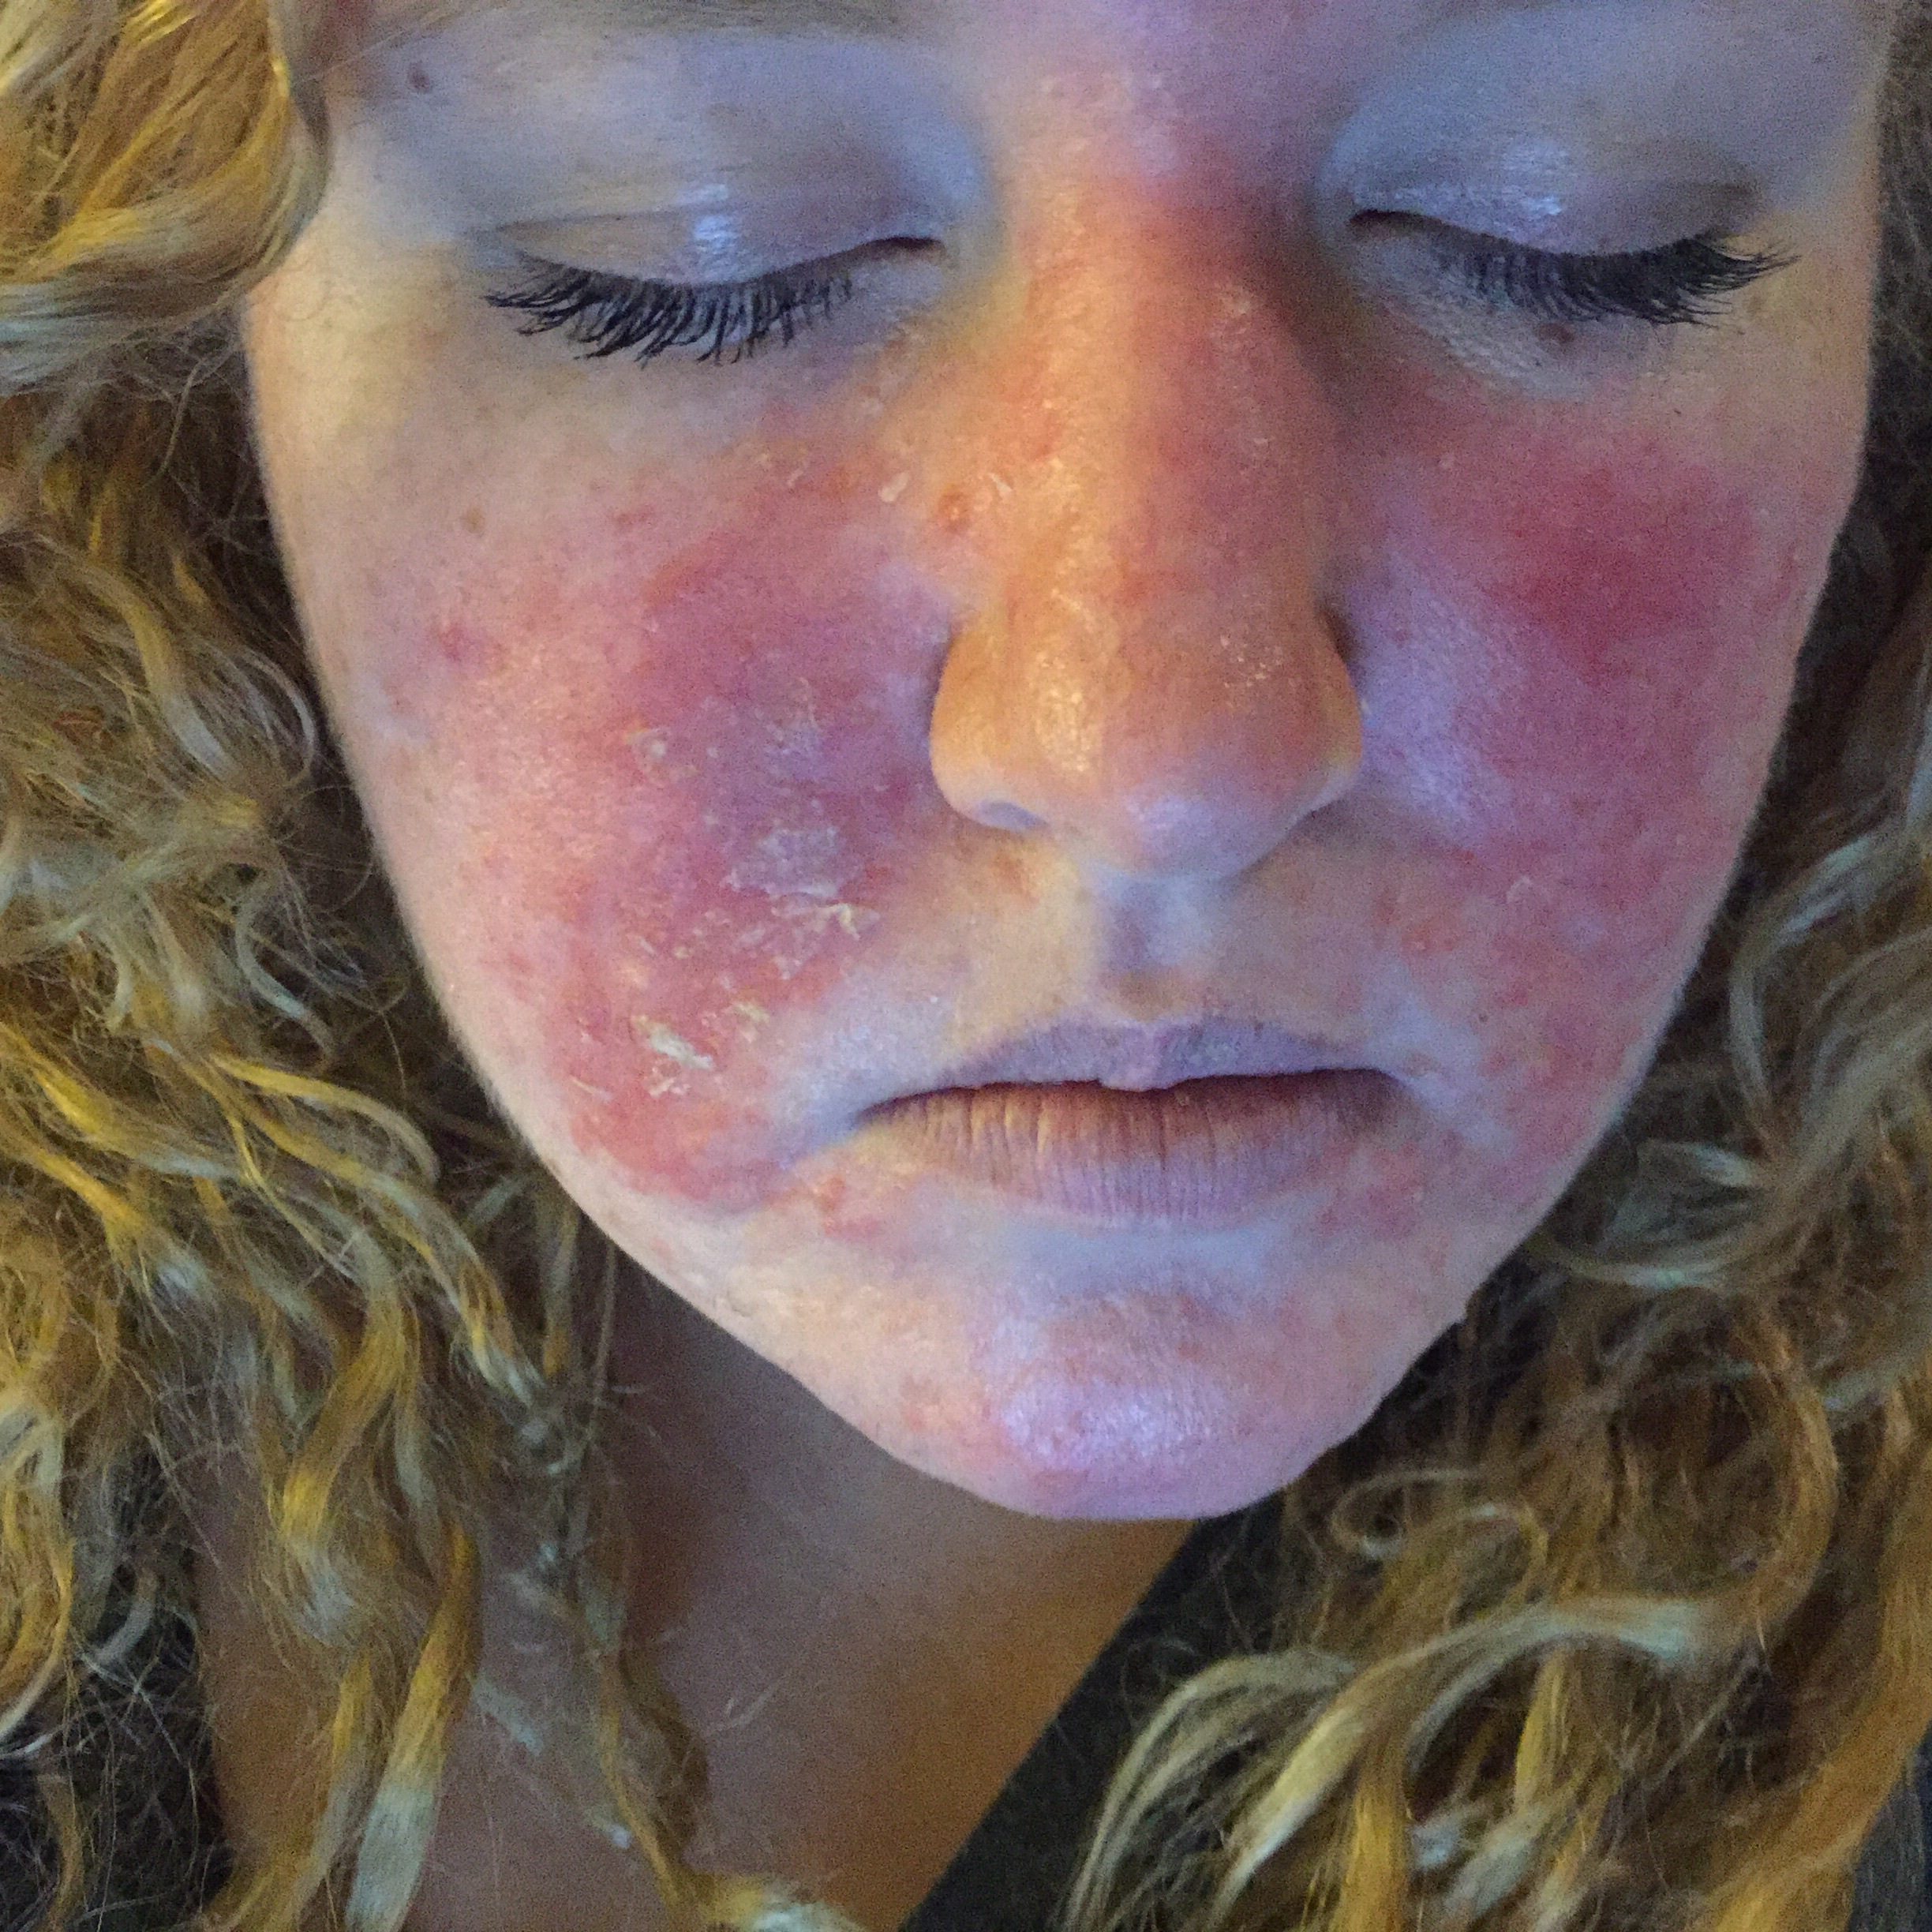 Allergic Reaction To Makeup On Face - Mugeek Vidalondon Makeup Allergic Reaction